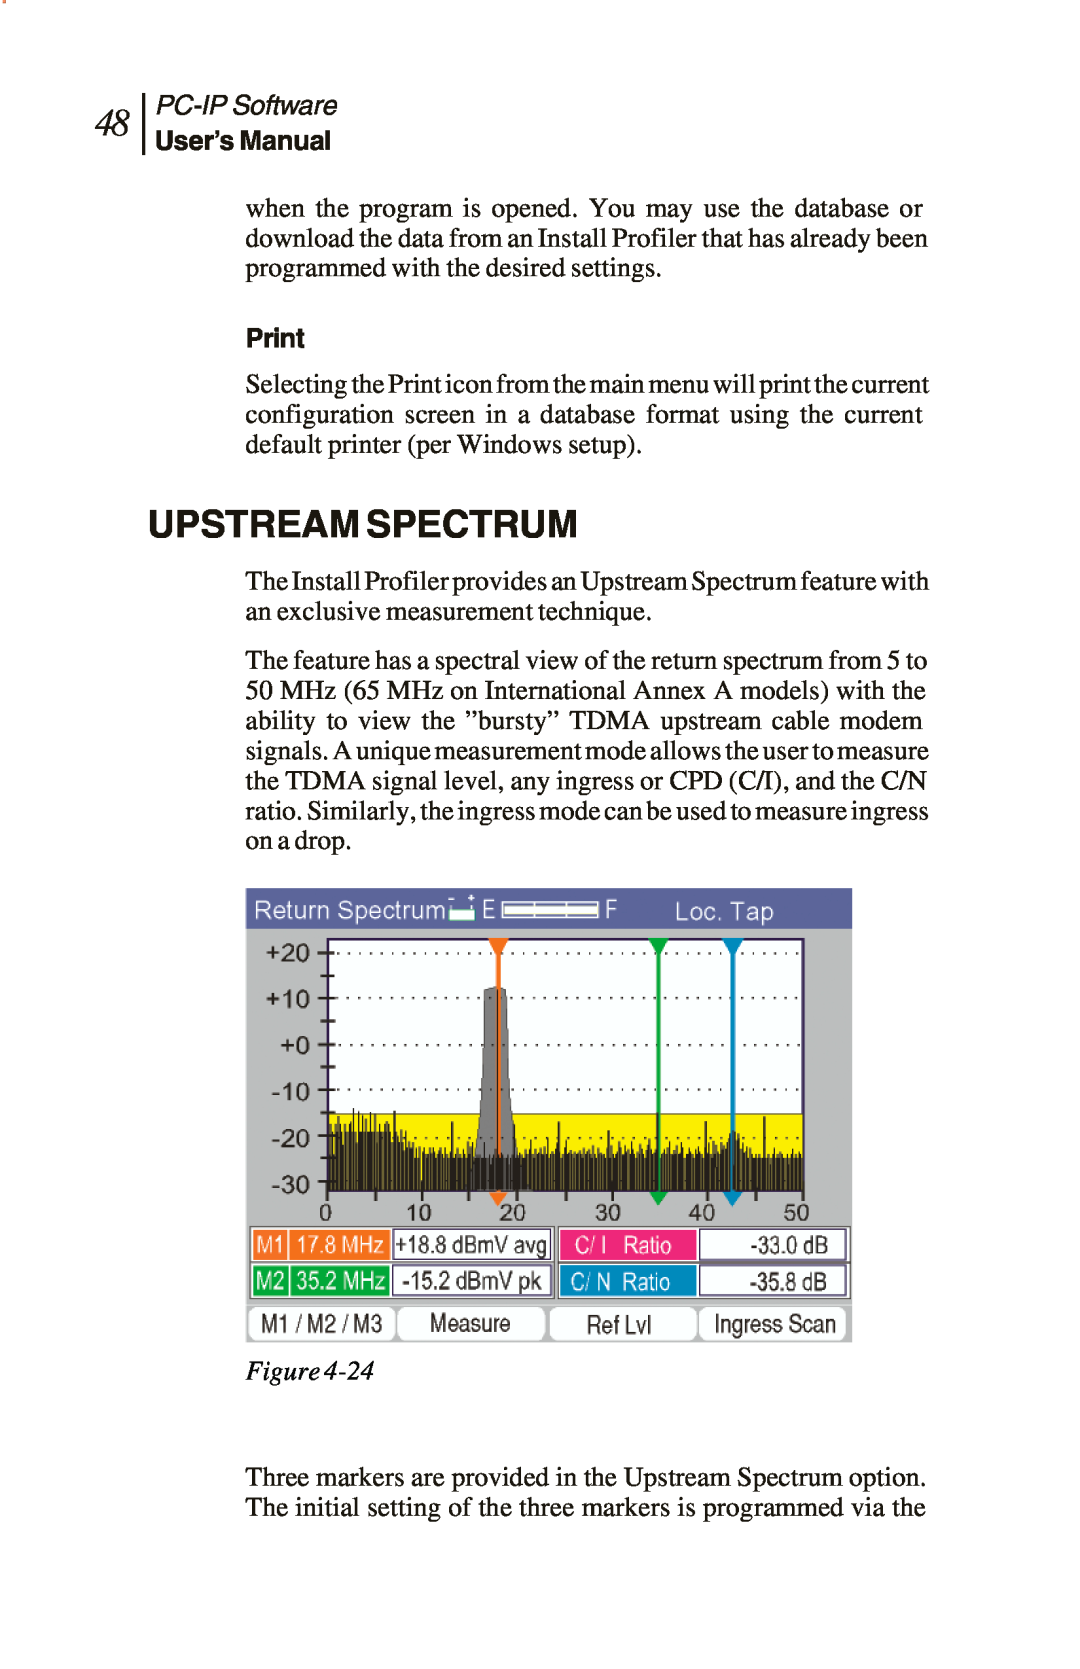 Sunrise Global CM100 IP, CM250 IP, and CM500 IP manual Upstream Spectrum, PC-IPSoftware, User’s Manual, Print, Figure 